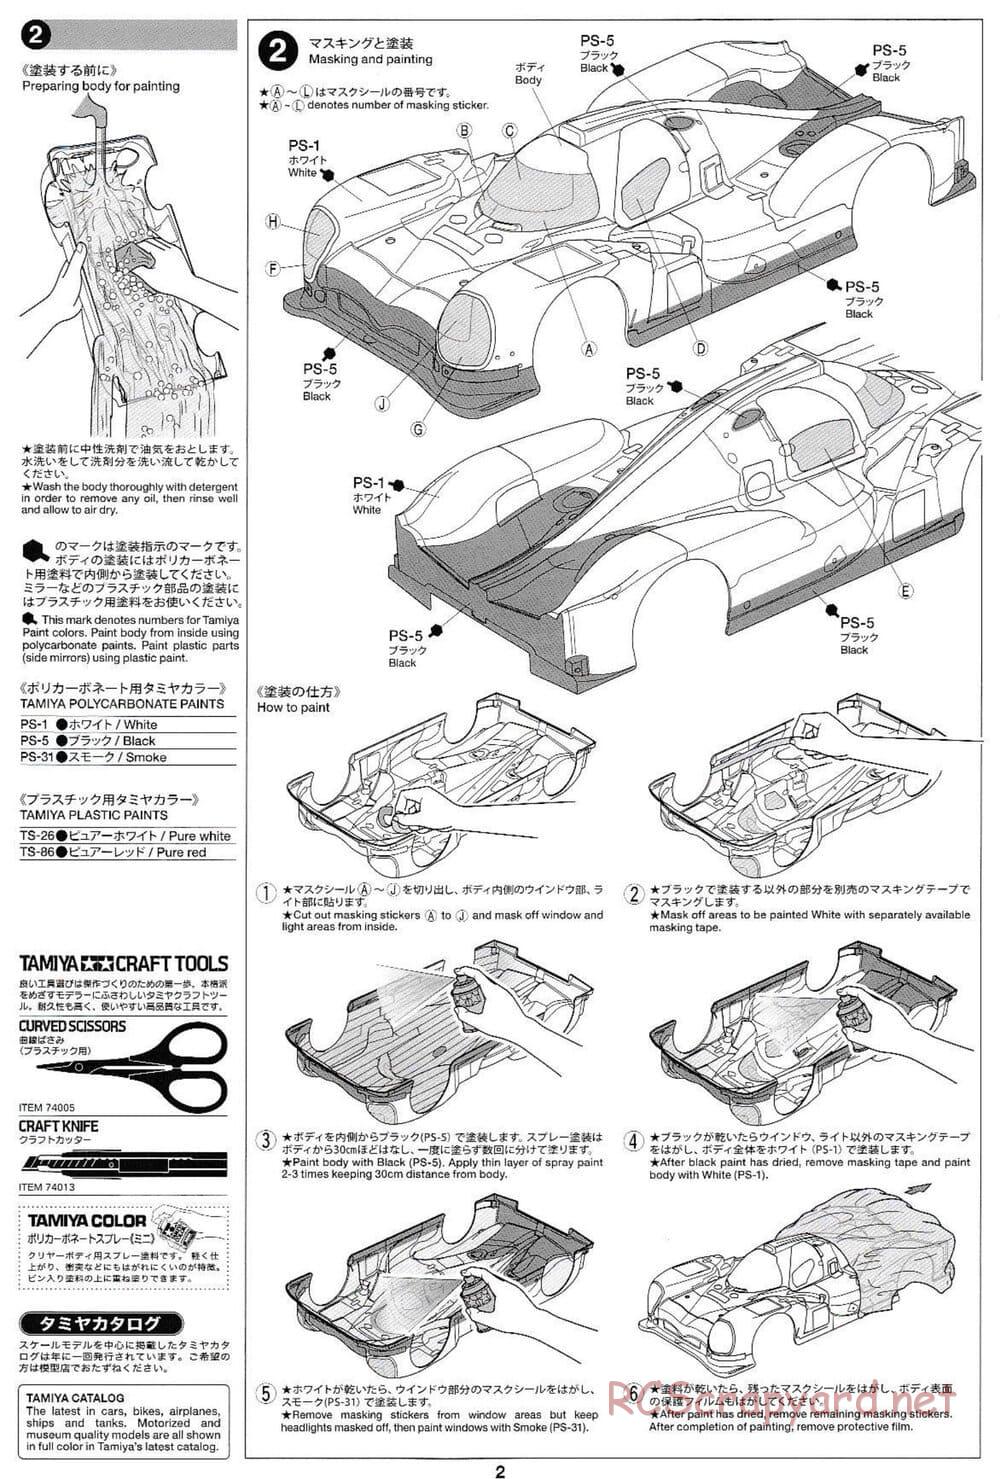 Tamiya - Toyota Gazoo Racing TS050 HYBRID - F103GT Chassis - Body Manual - Page 2